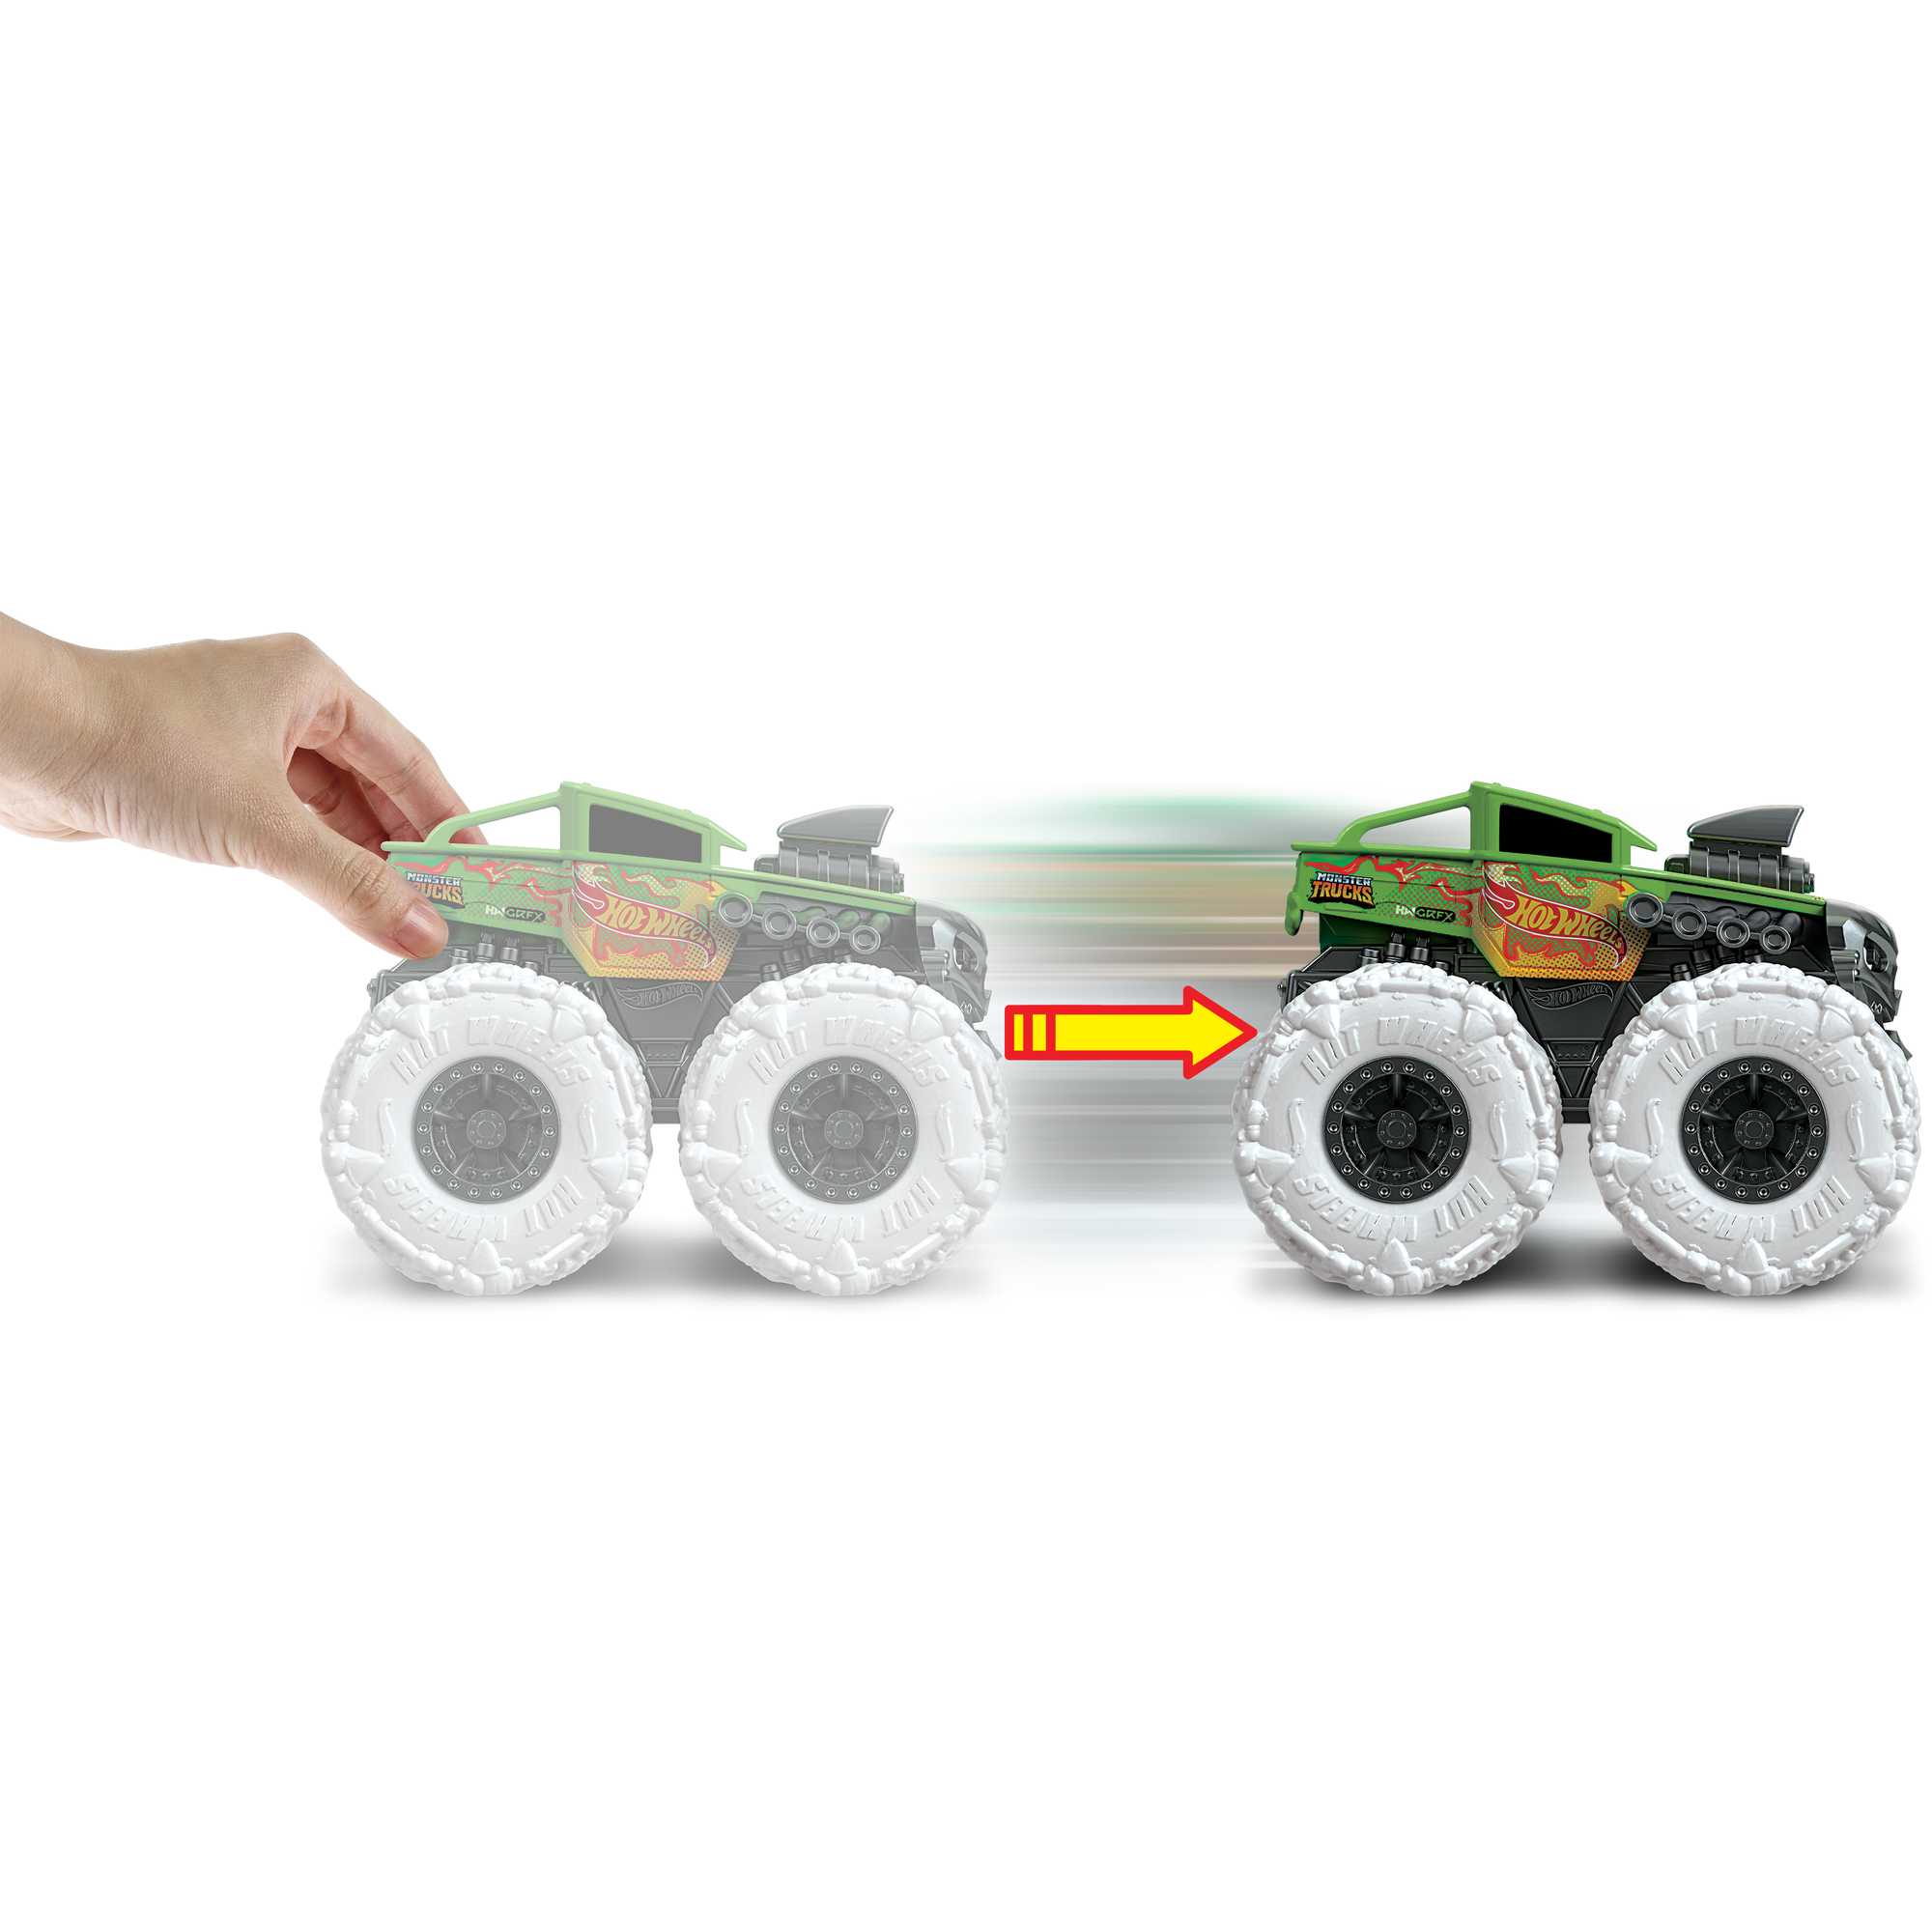 Hot Wheels Monster Trucks Bone Shaker Vehicle with Giant Wheels